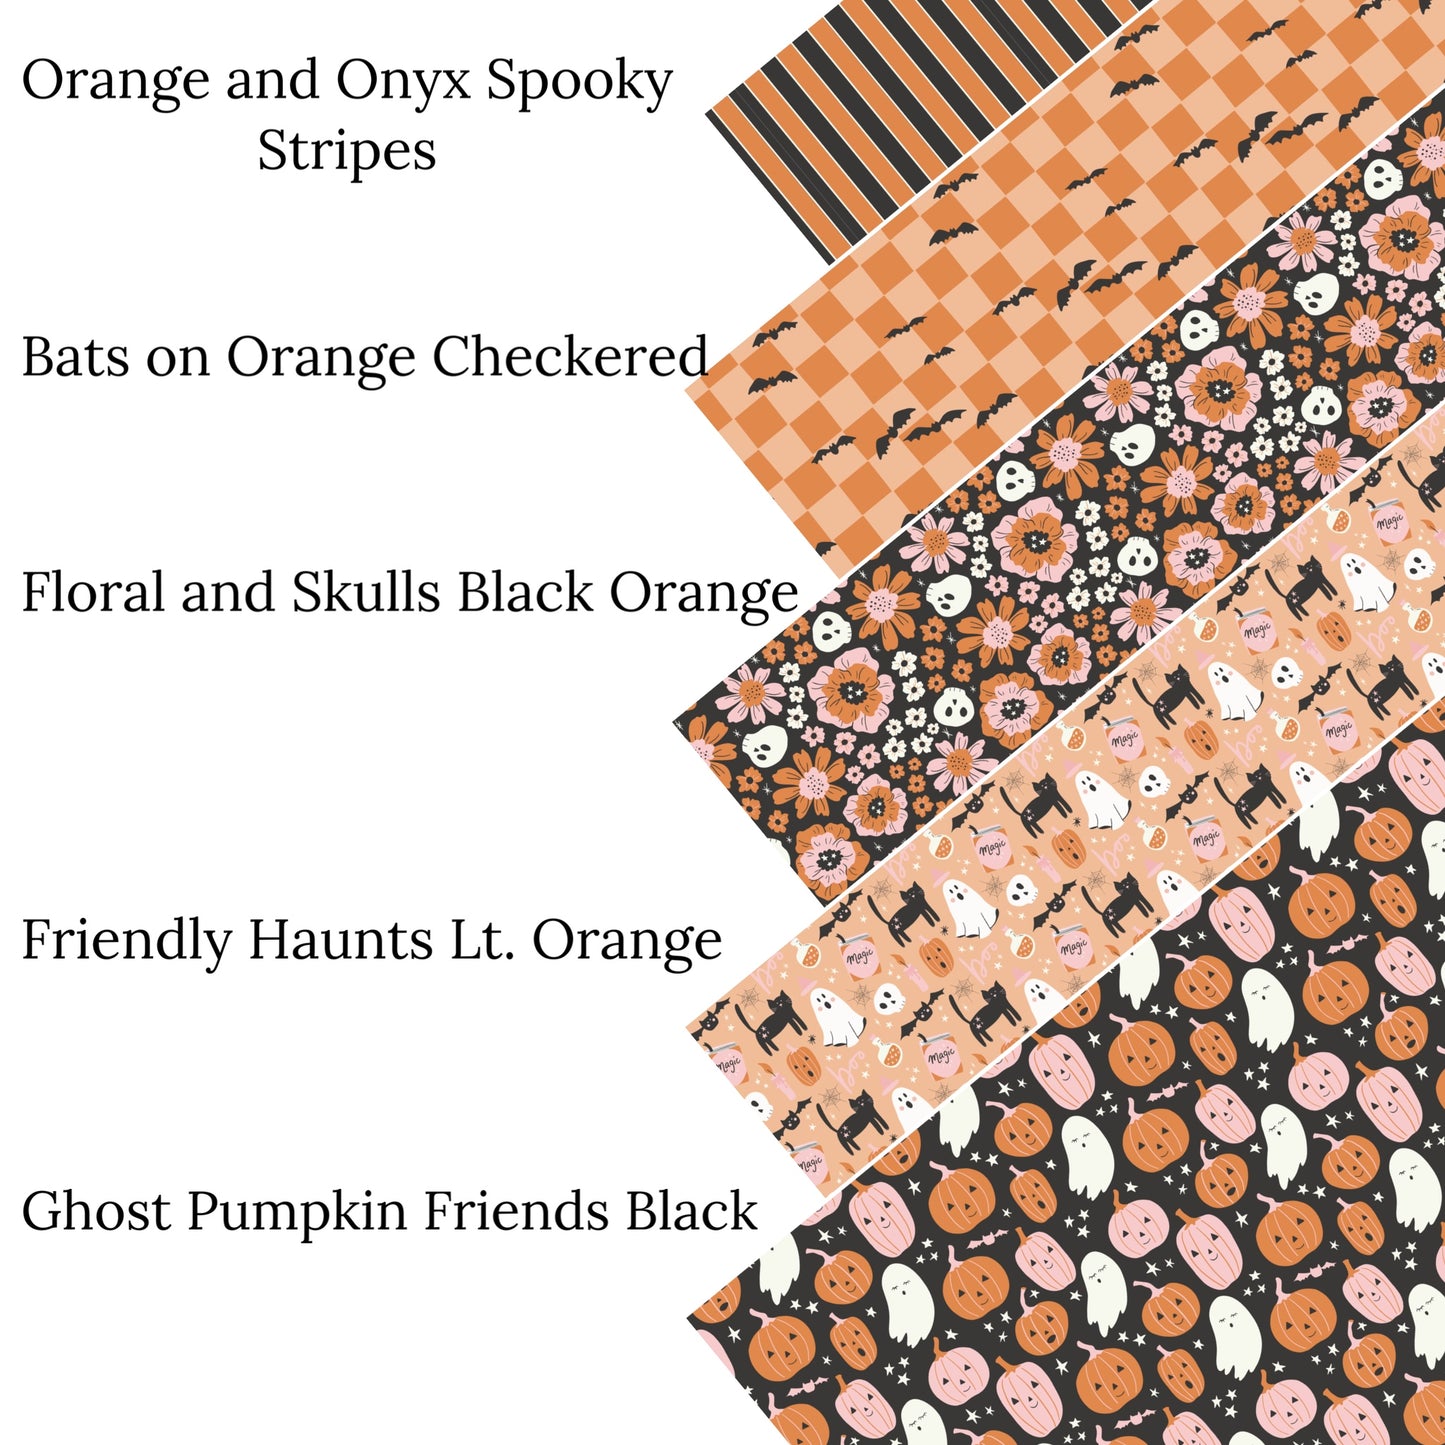 Florals and Skulls Black Orange Faux Leather Sheets